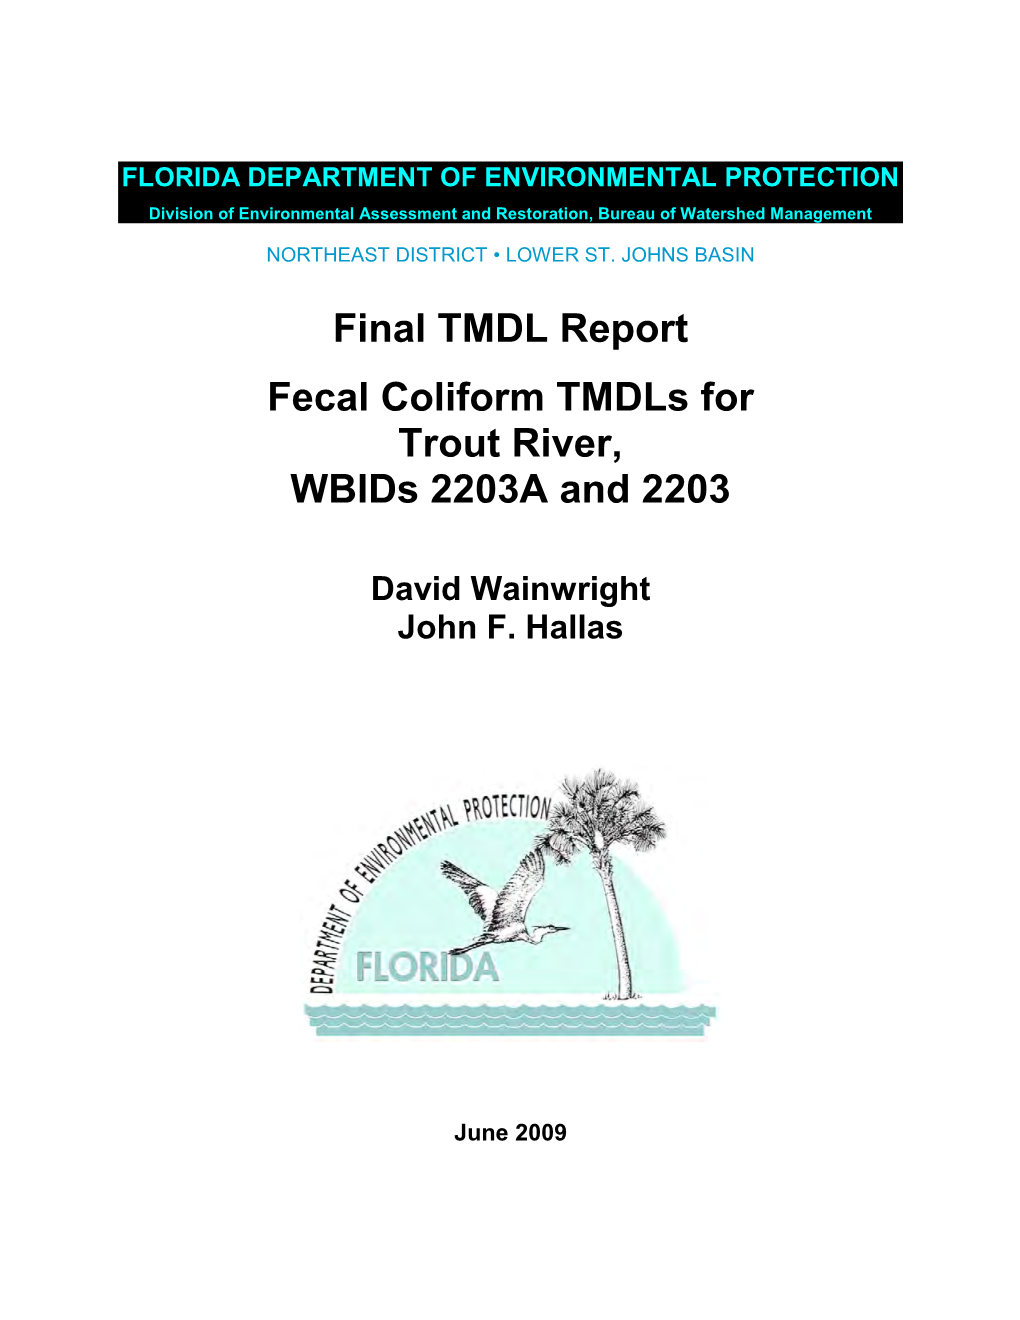 Final TMDL Report Fecal Coliform Tmdls for Trout River, Wbids